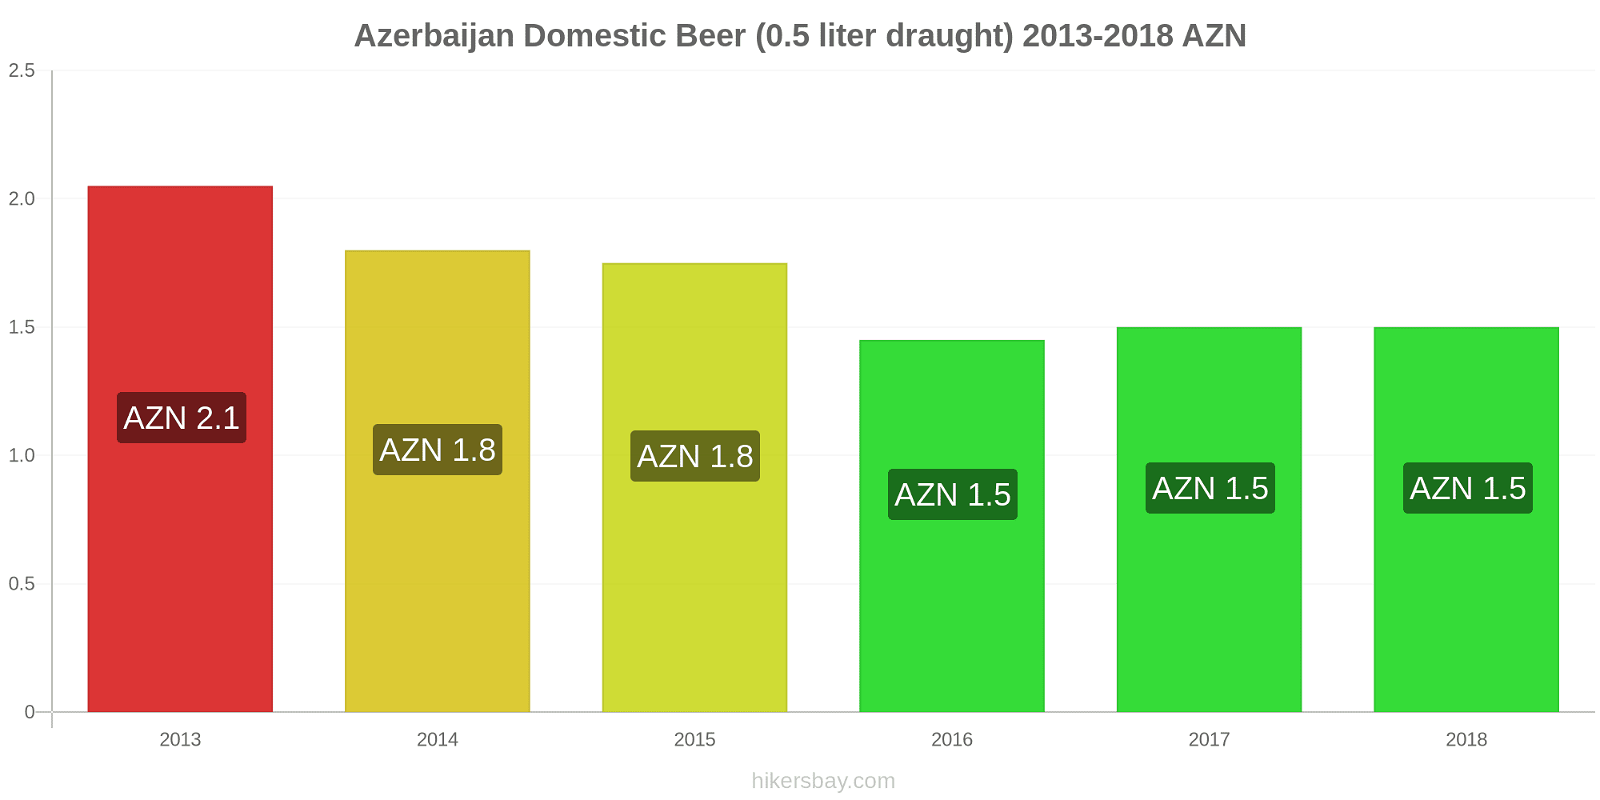 Azerbaijan price changes Domestic Beer (0.5 liter draught) hikersbay.com